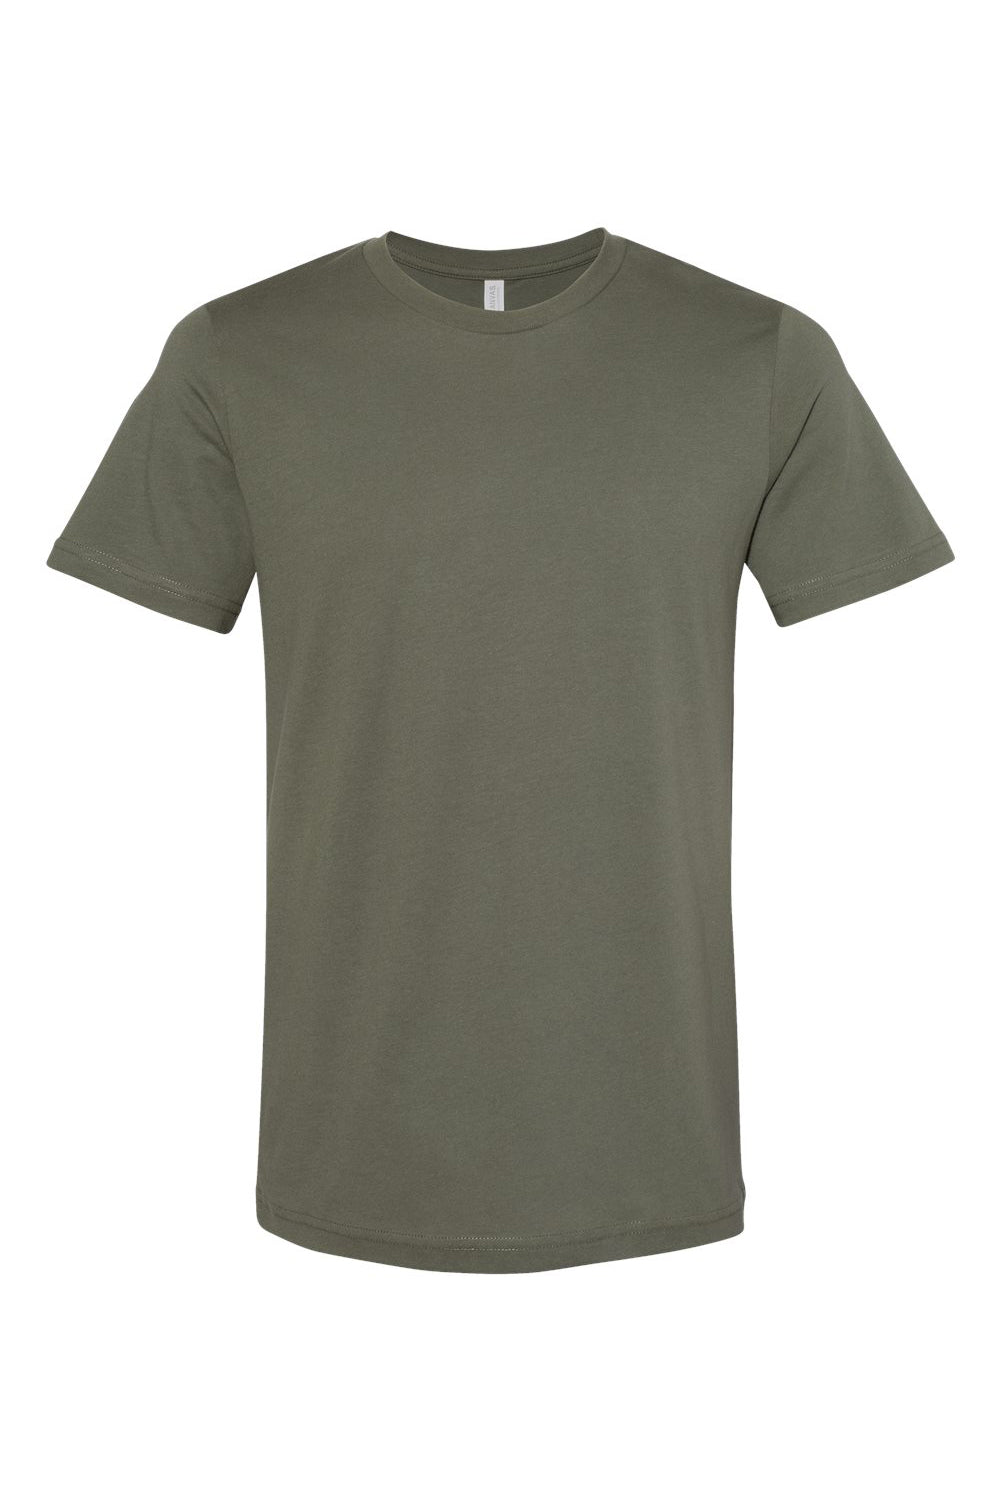 Bella + Canvas 3001U/3001USA Mens USA Made Jersey Short Sleeve Crewneck T-Shirt Military Green Flat Front